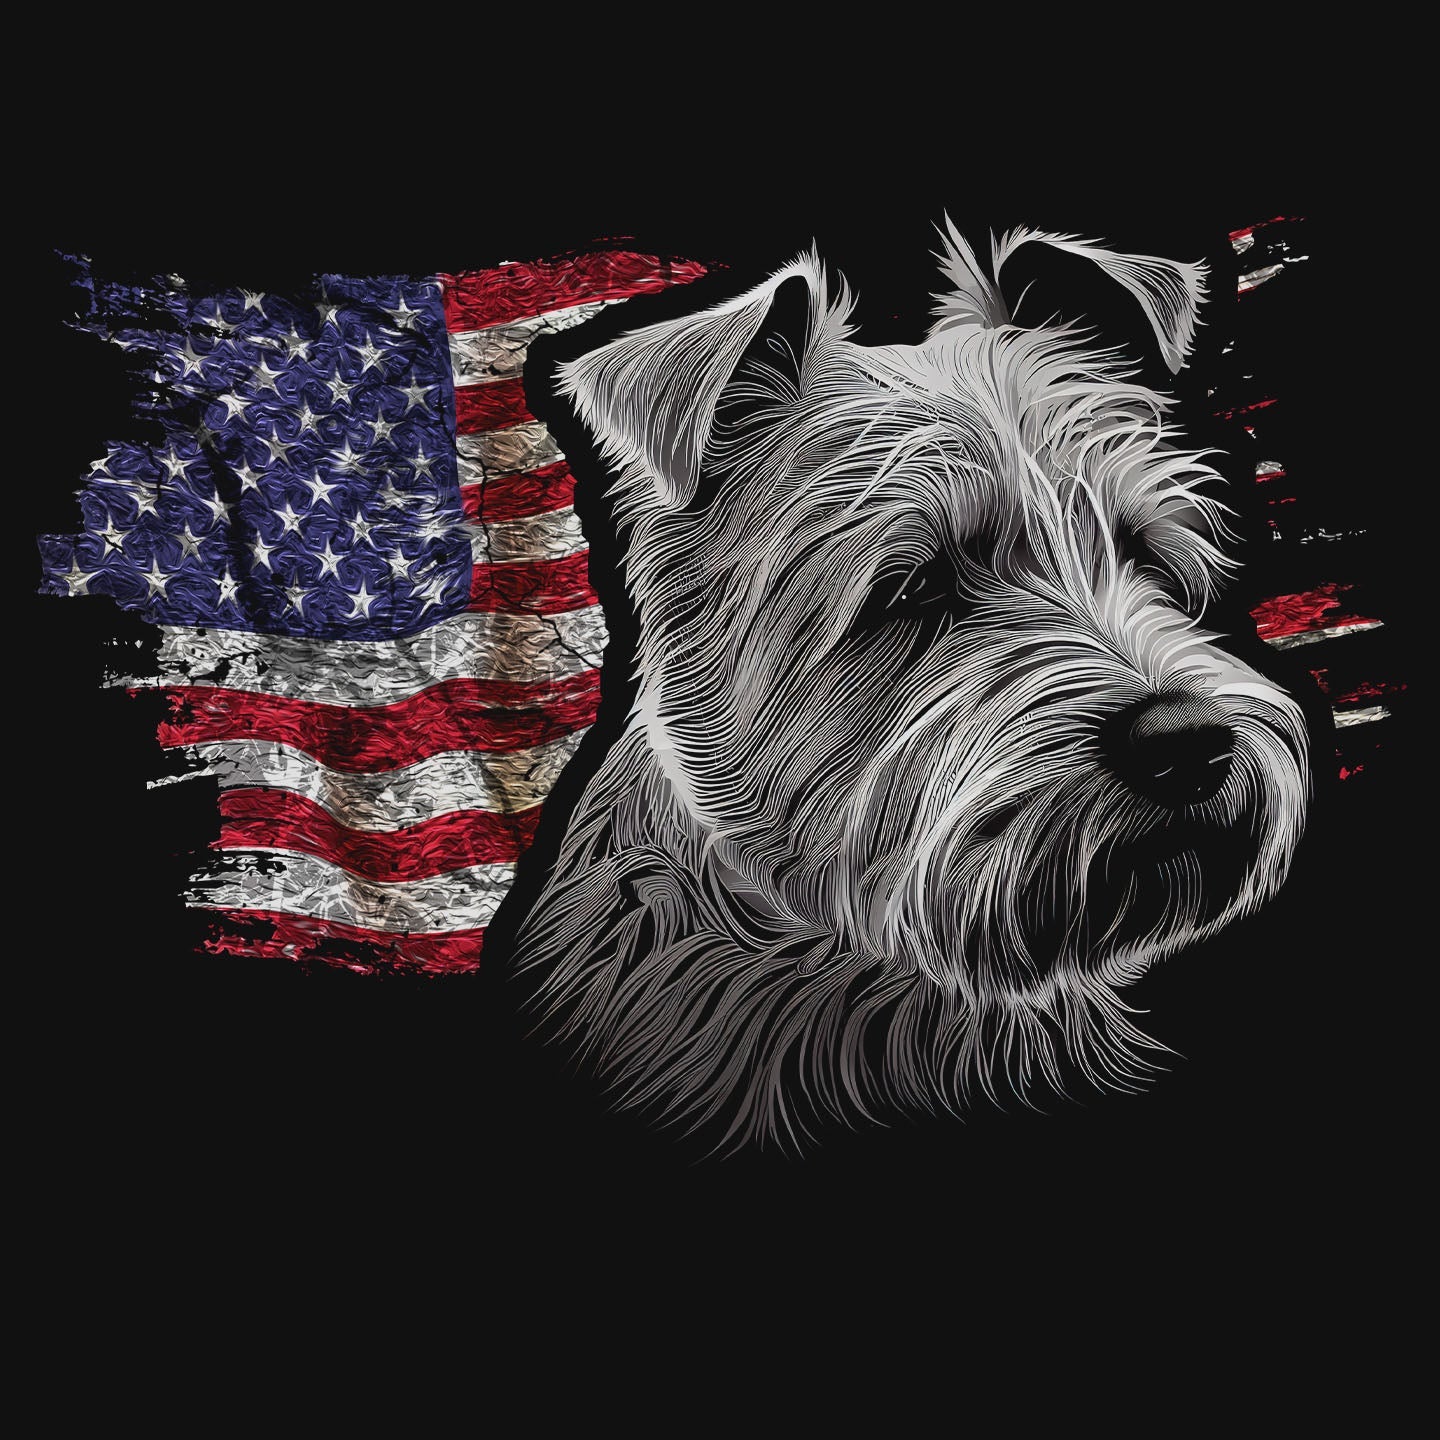 Patriotic Glen of Imaal Terrier American Flag - Women's V-Neck T-Shirt